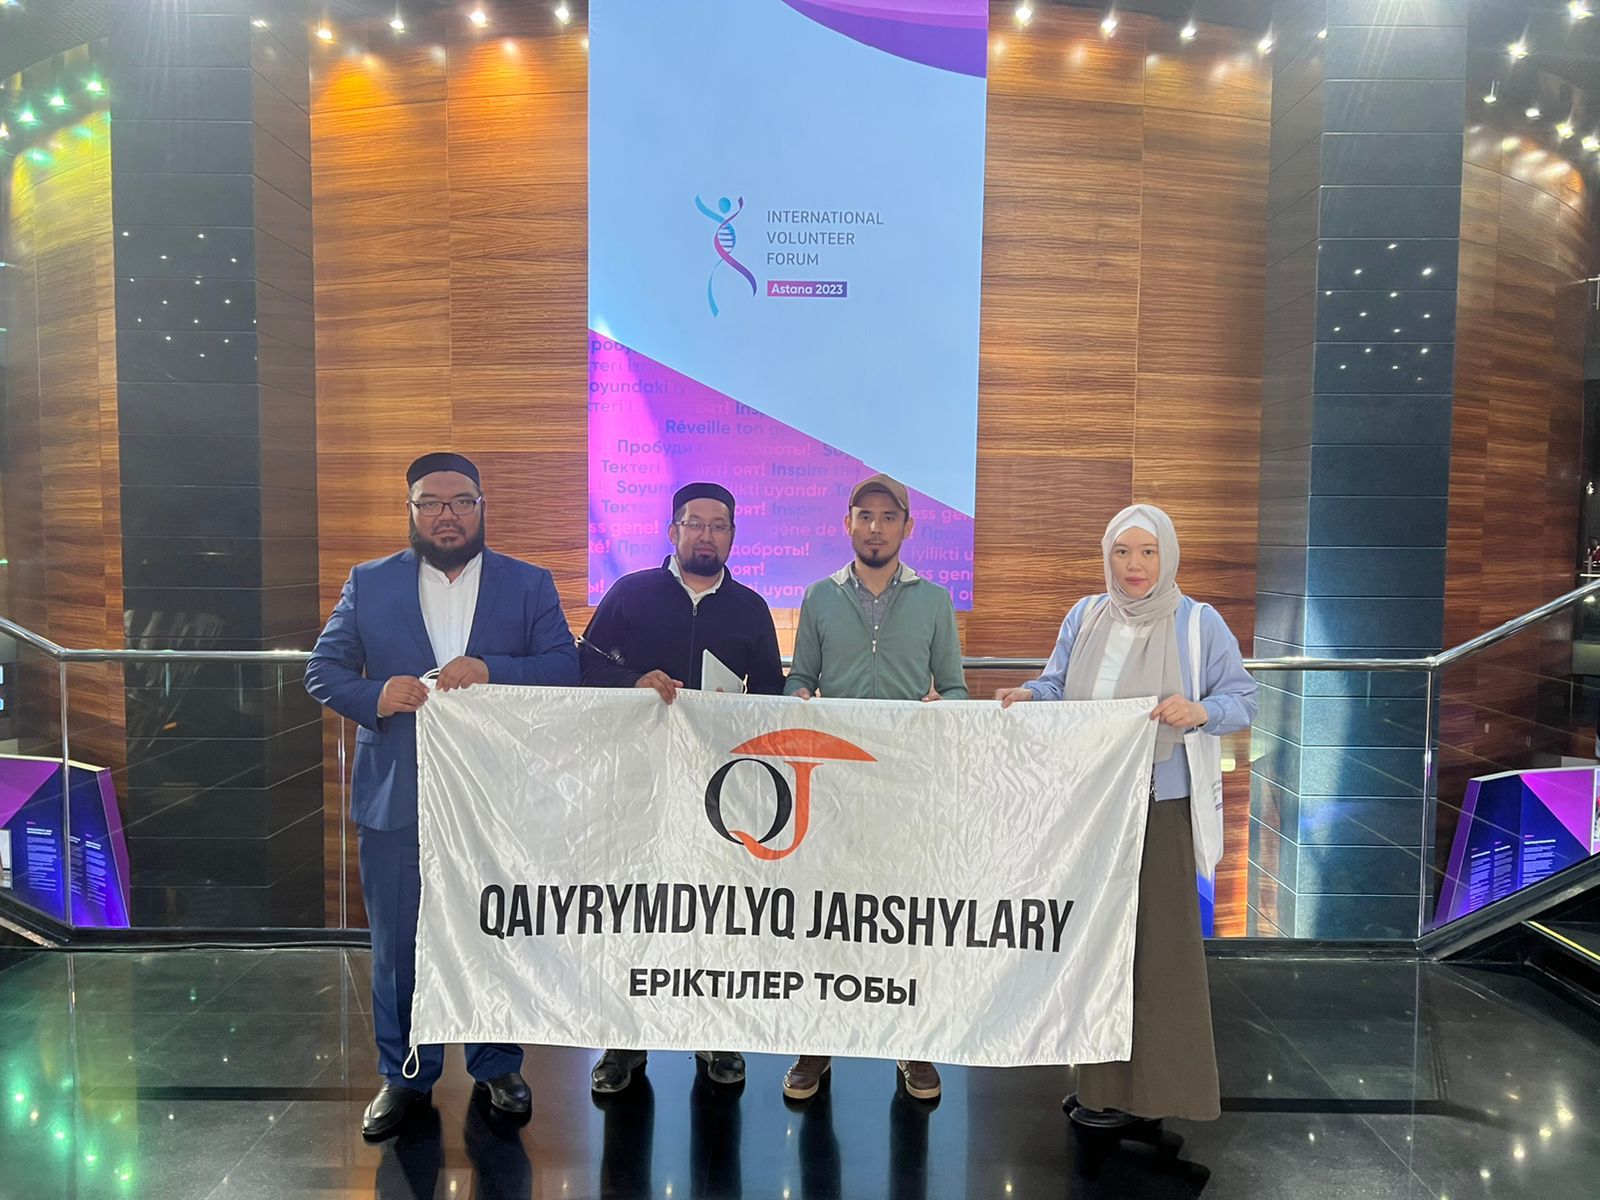 Волонтерская группа «Qaiyrymdylyq jarshylary» – на международном форуме